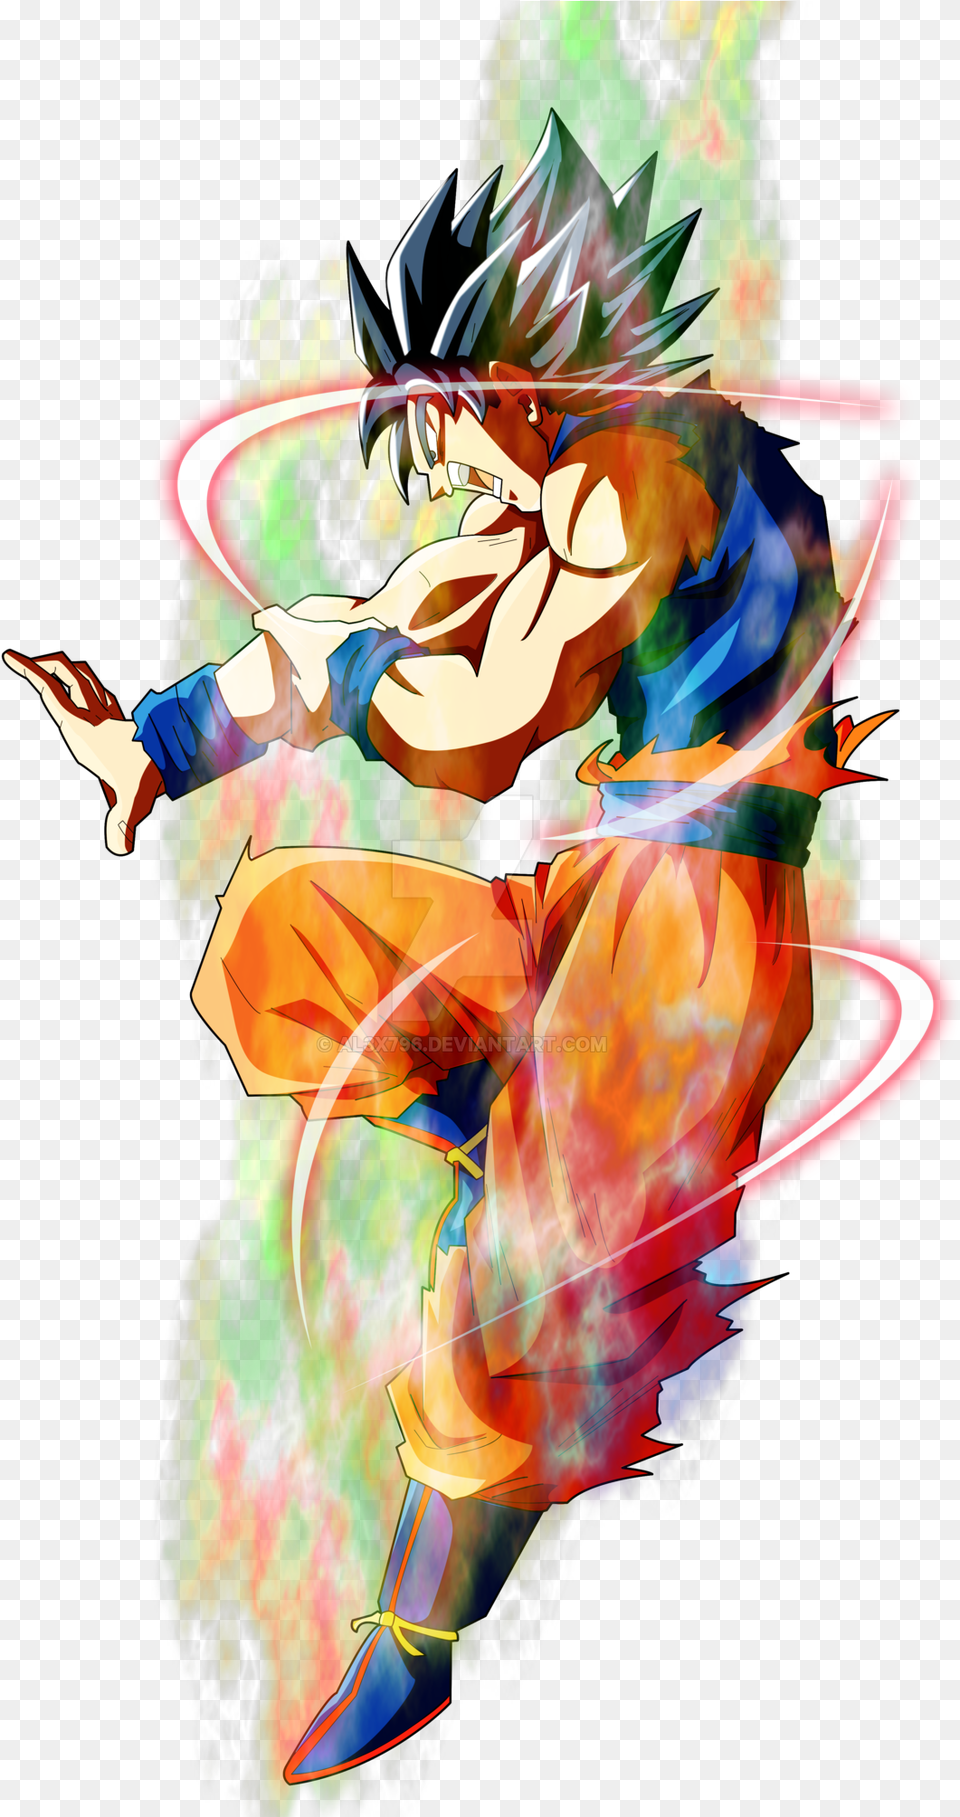 Goku Limit Break Form Aura Effects By Al3x796 Dbf7pi5 Limit Breaker Aura, Art, Graphics, Person, Anime Png